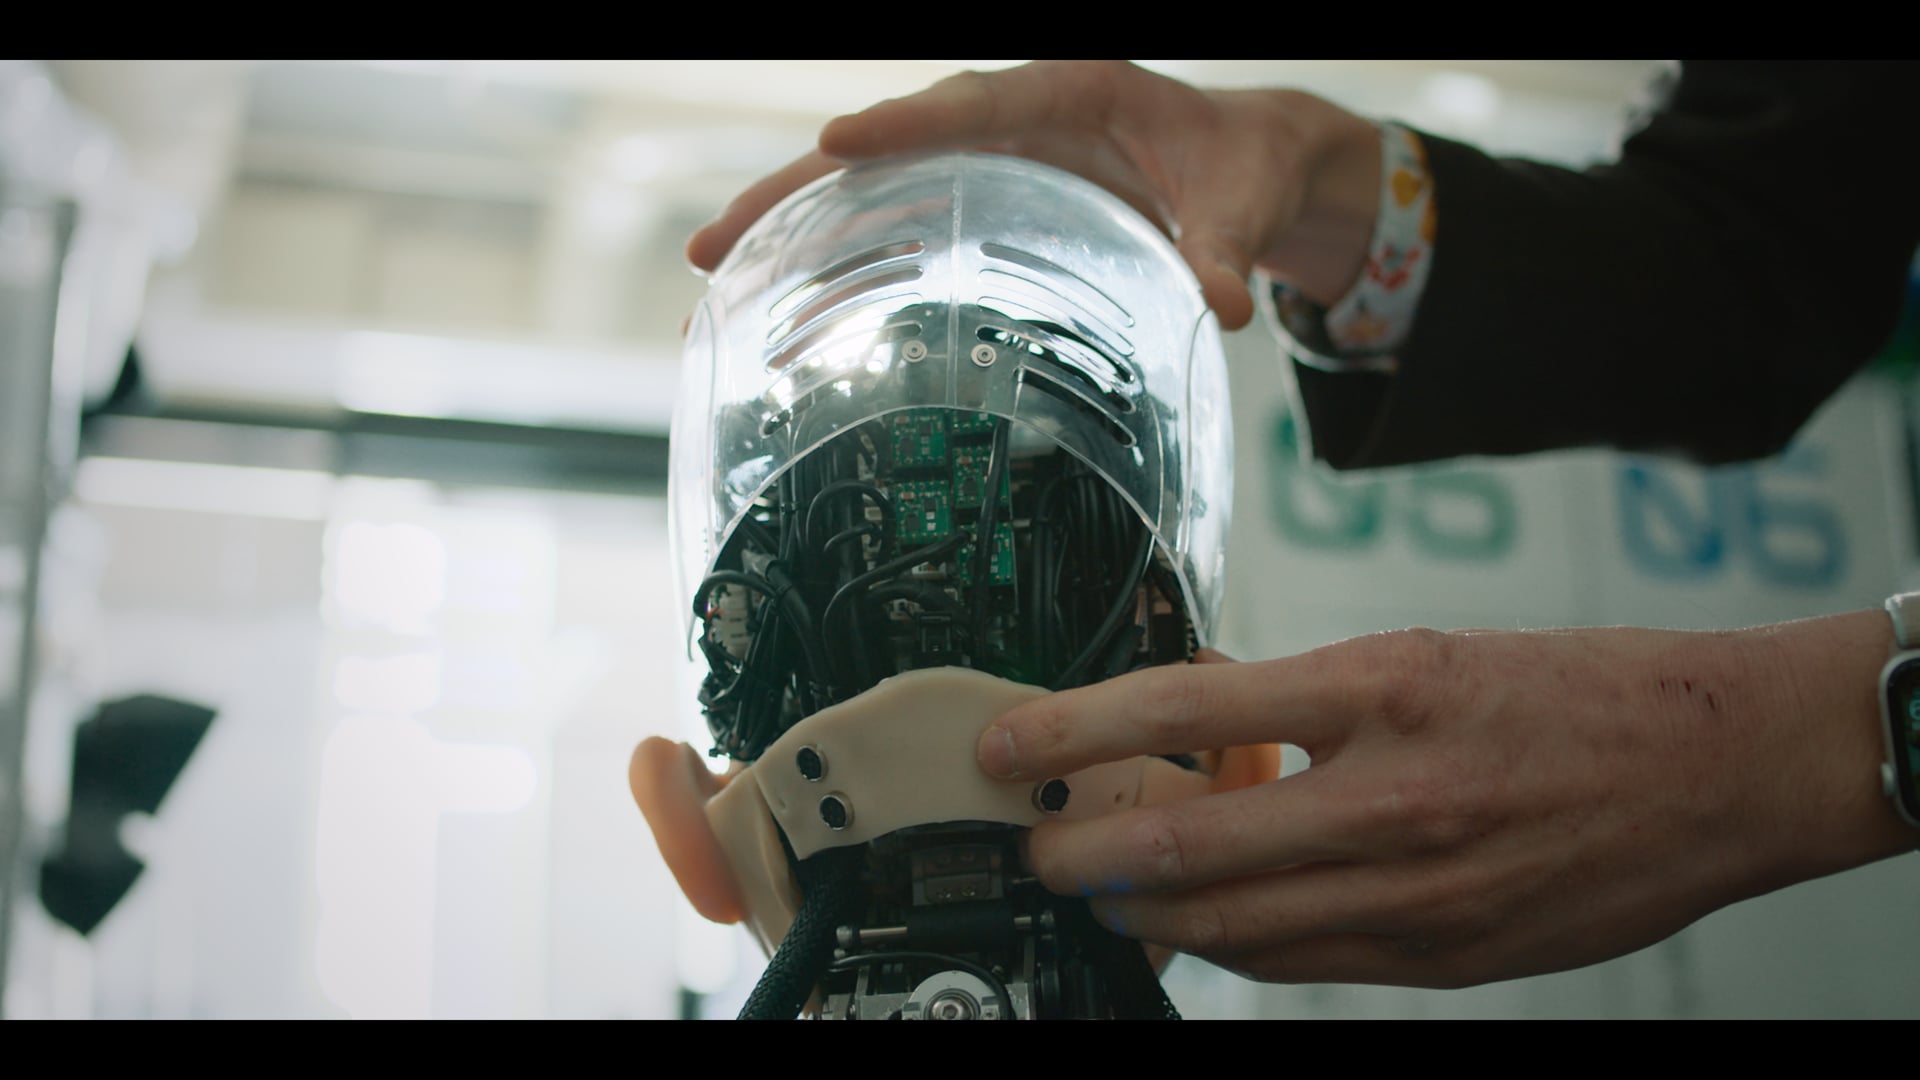 Ishiguro Symbiotic Human Robot Interaction Project